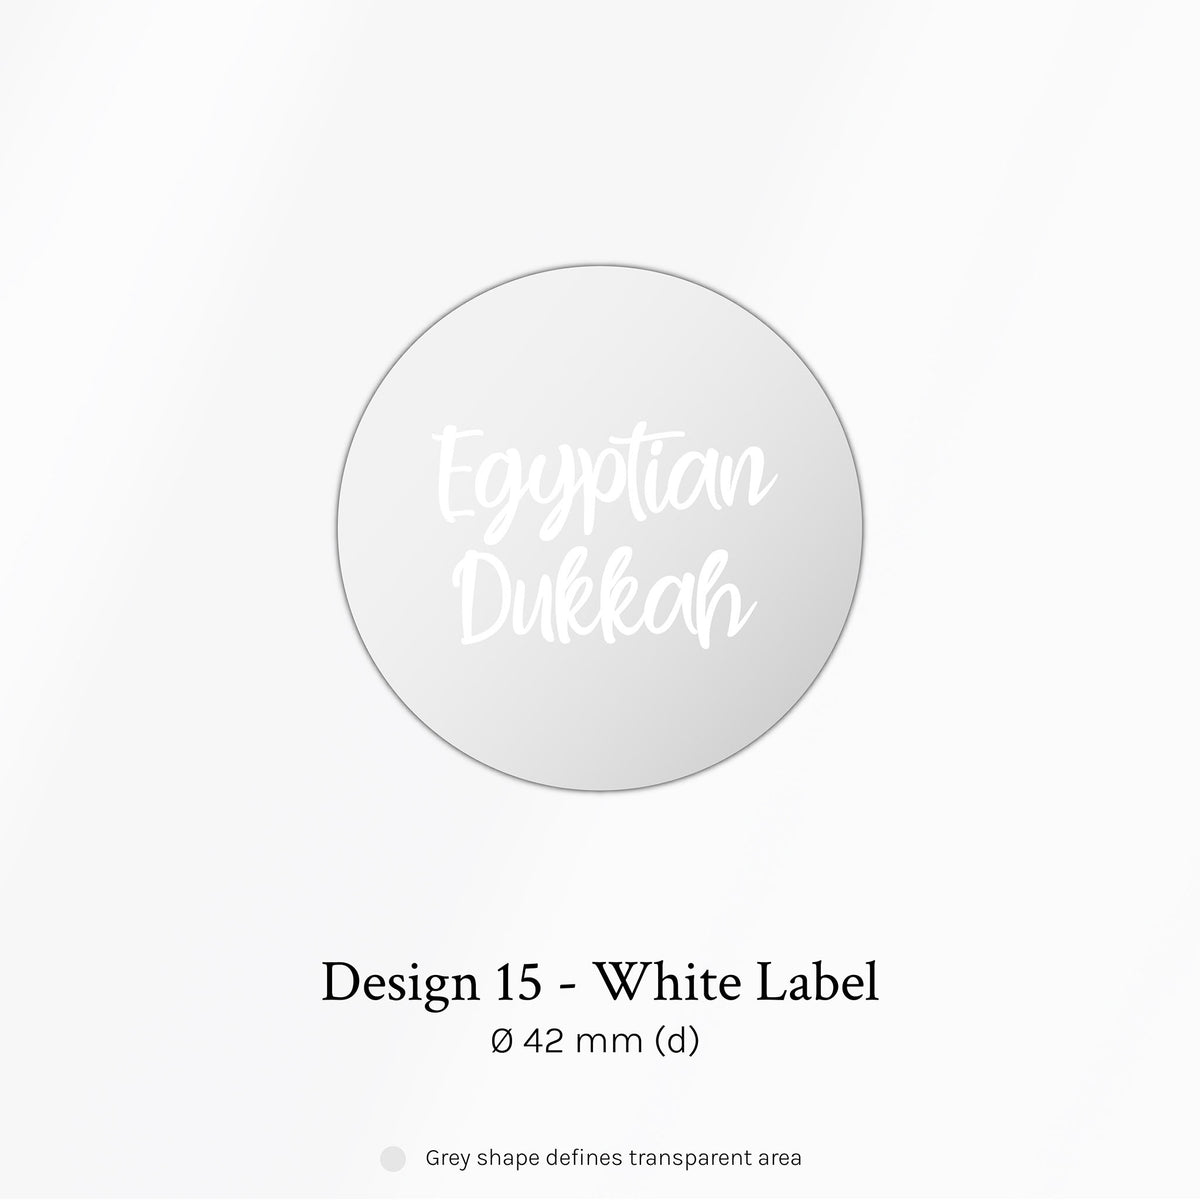 Custom Spice Jar Labels (All Designs)